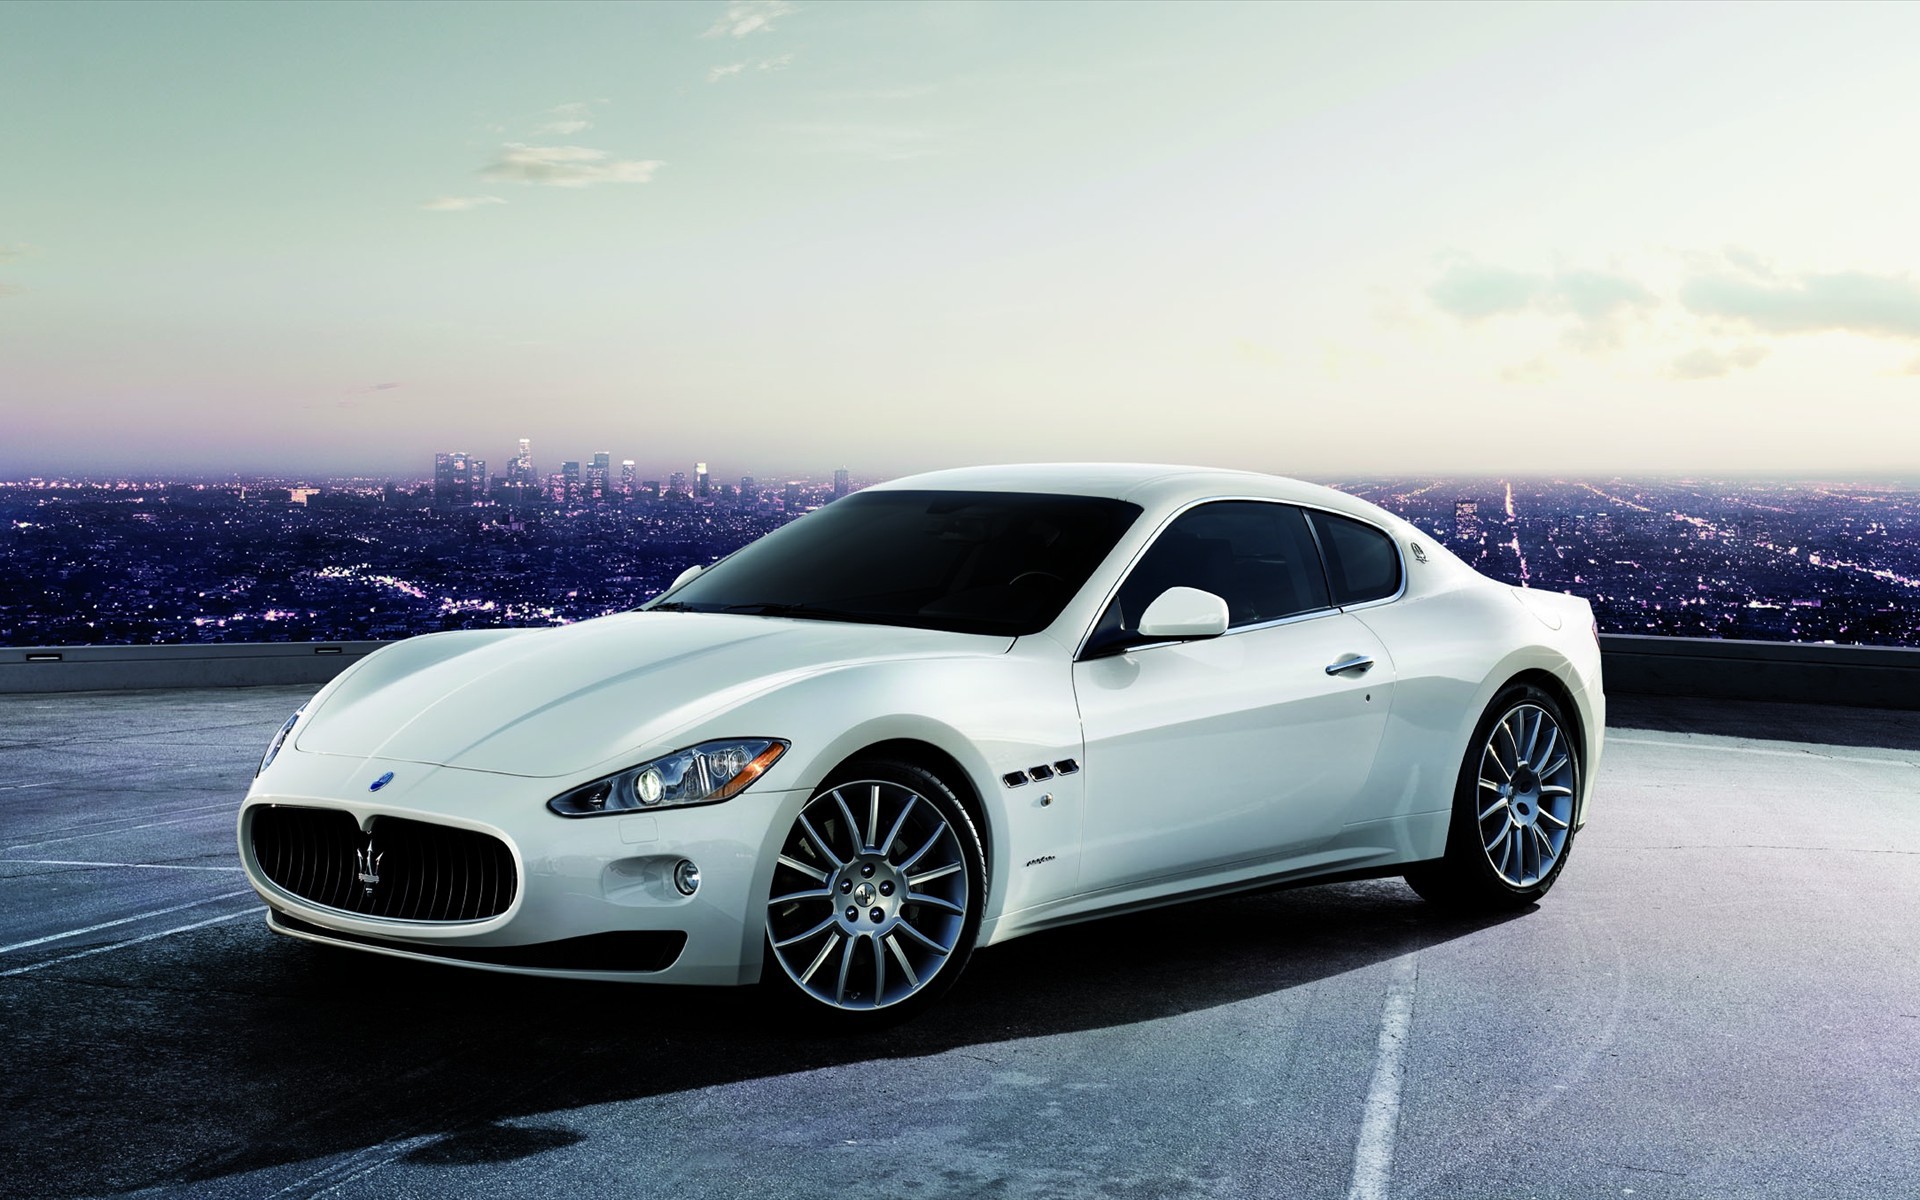 Descarga gratuita de fondo de pantalla para móvil de Automóvil, Maserati, Transporte.